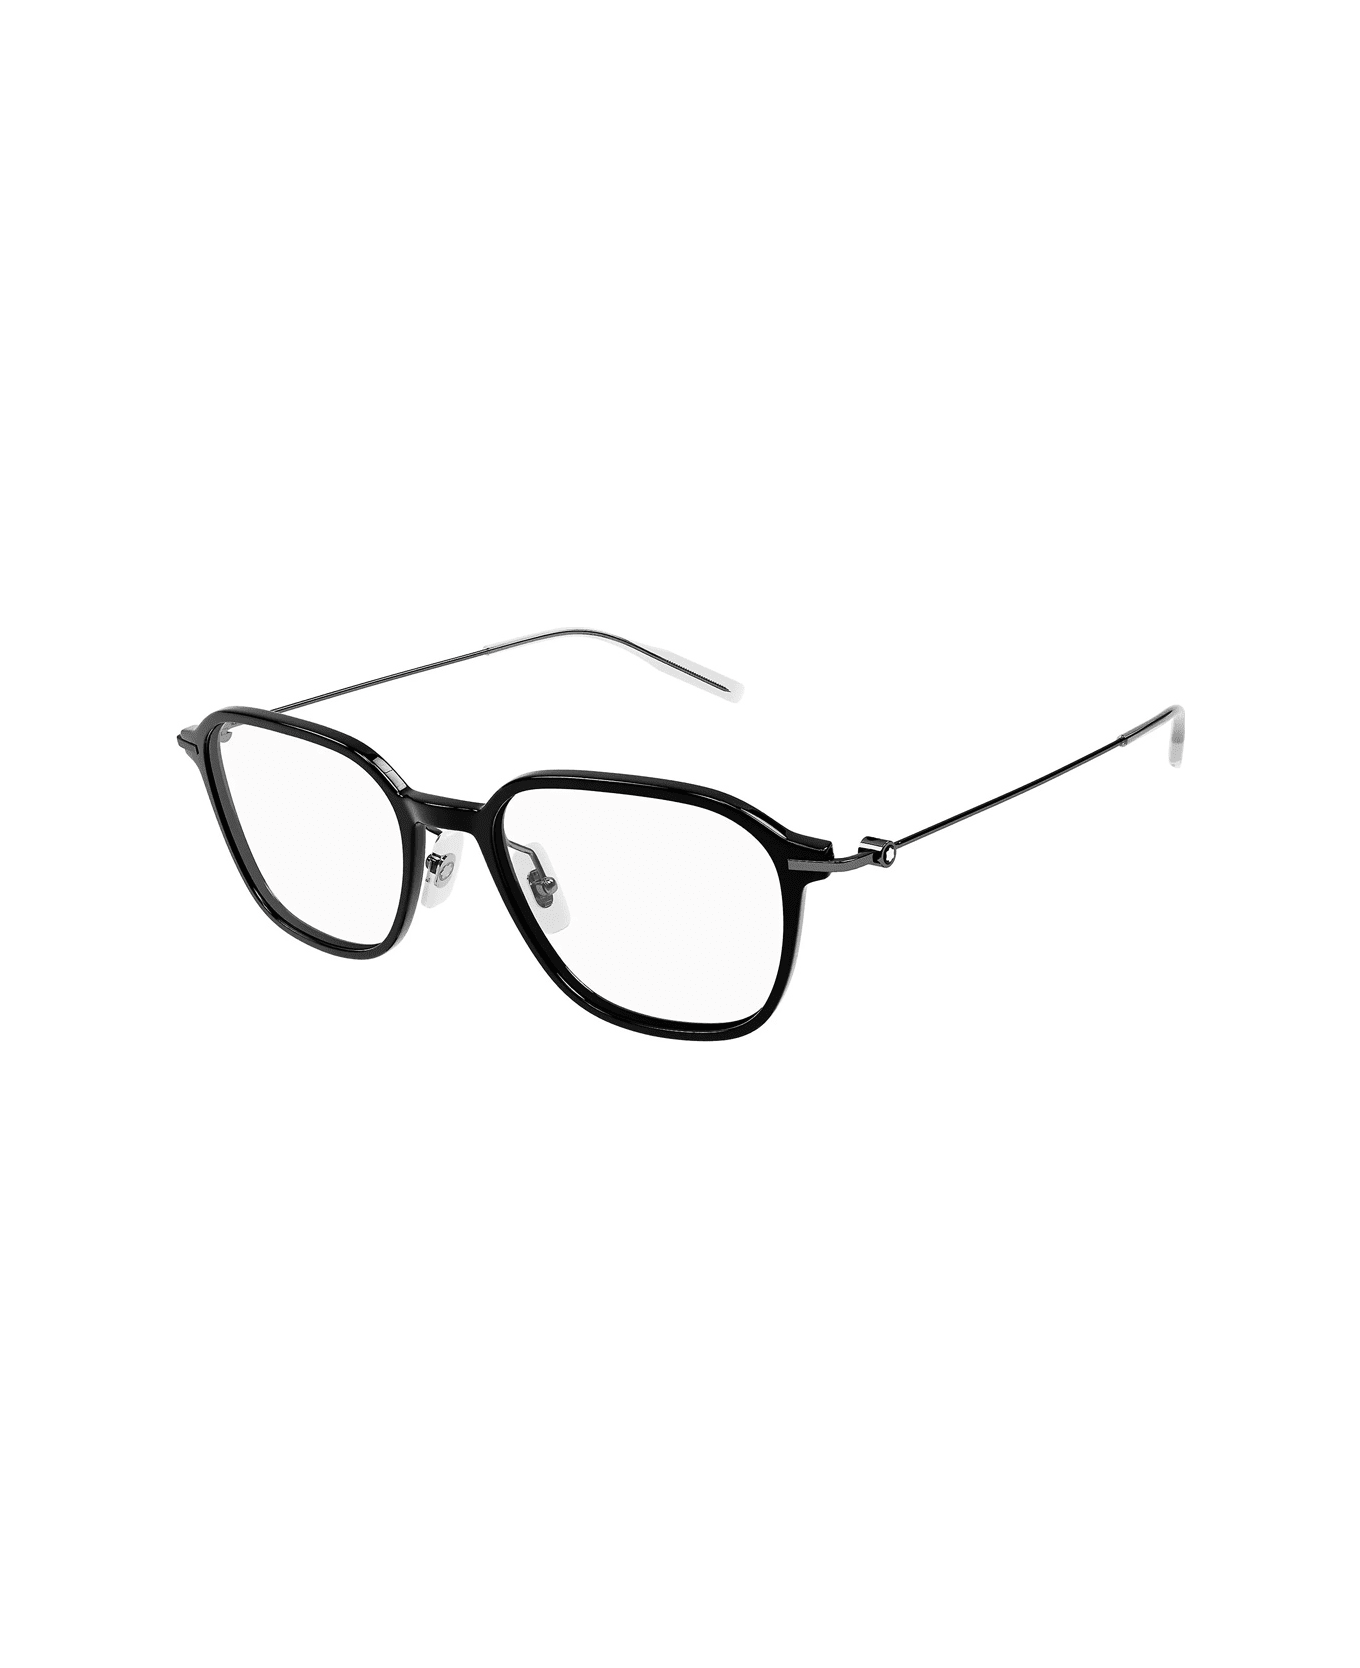 Montblanc Mb0207o Linea Established 001 Glasses - Nero